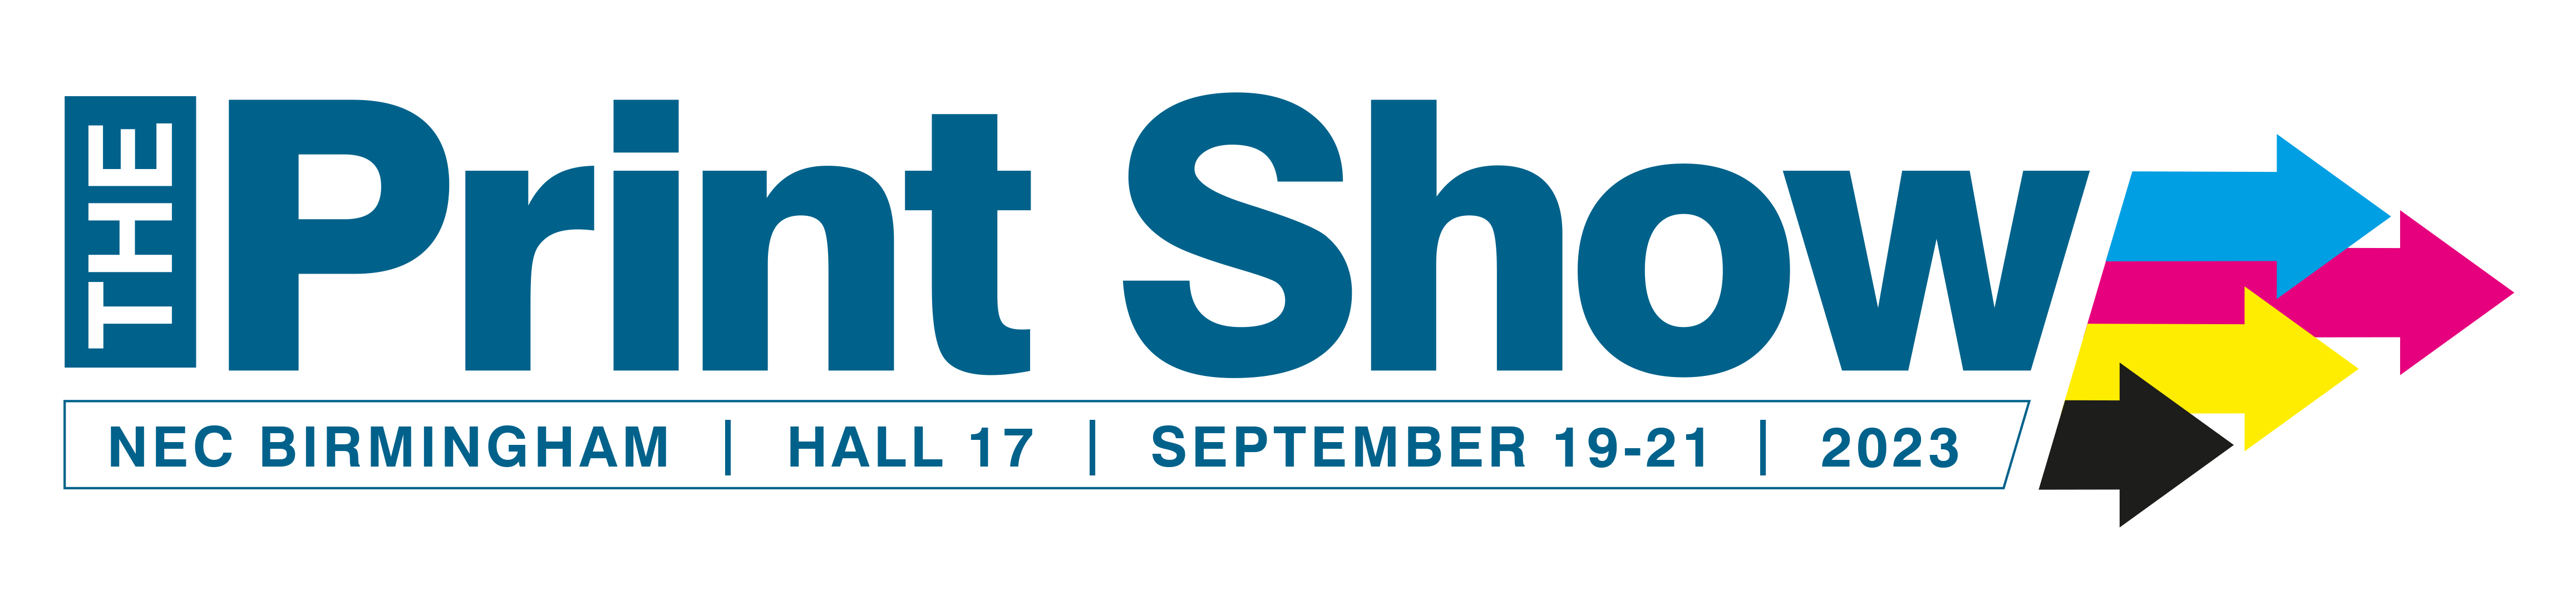 Print Show Logo 2023.jpg